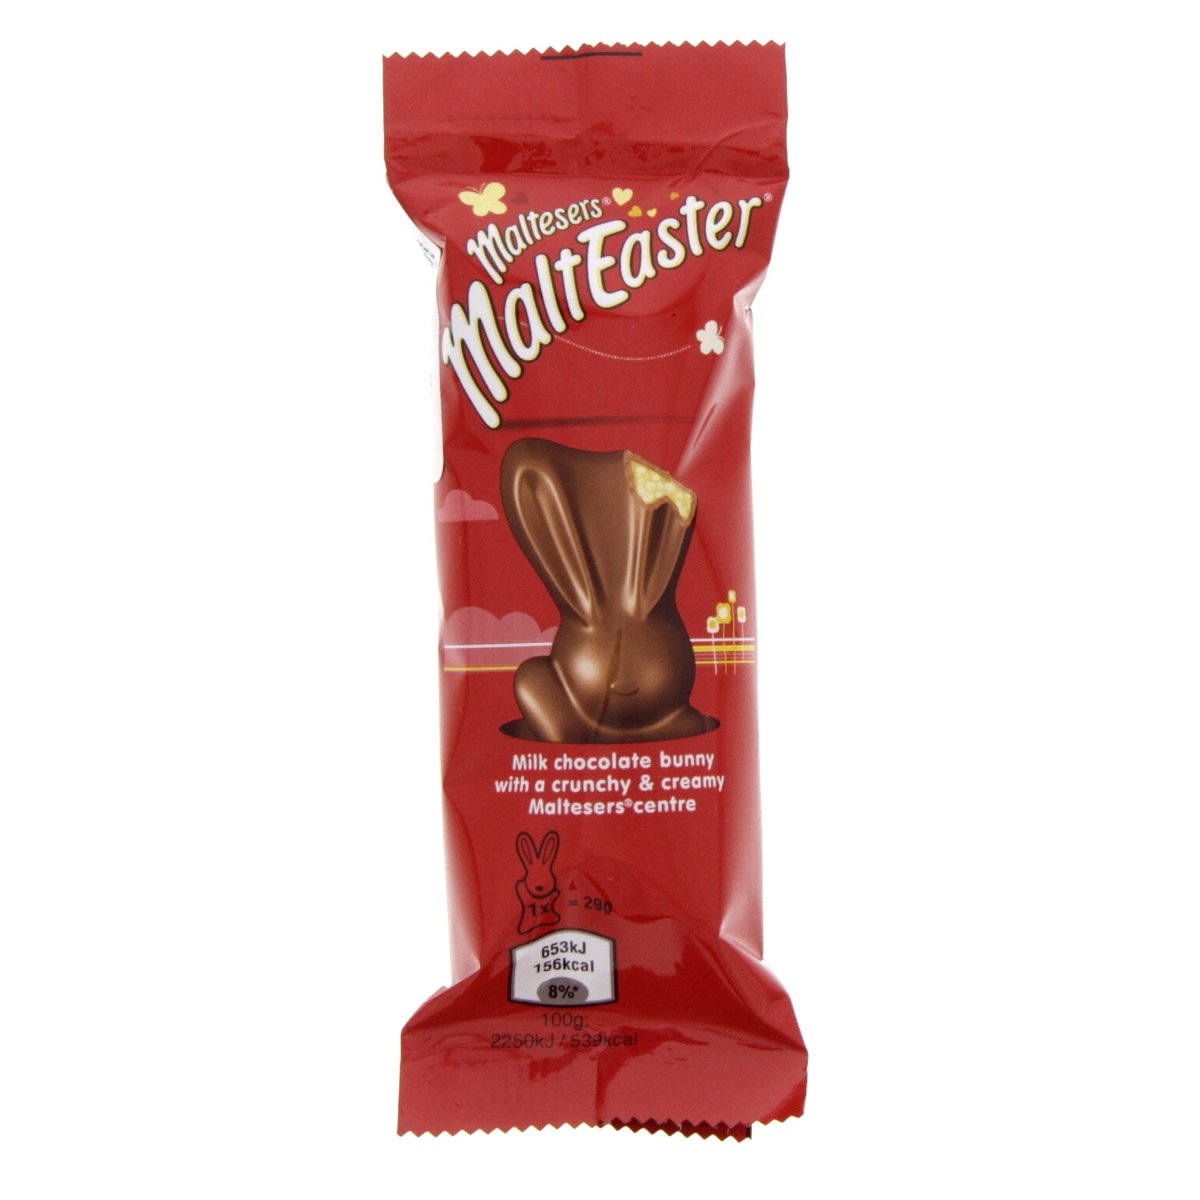 Maltesers Malt Easter Milk Chocolate Bunny 29g